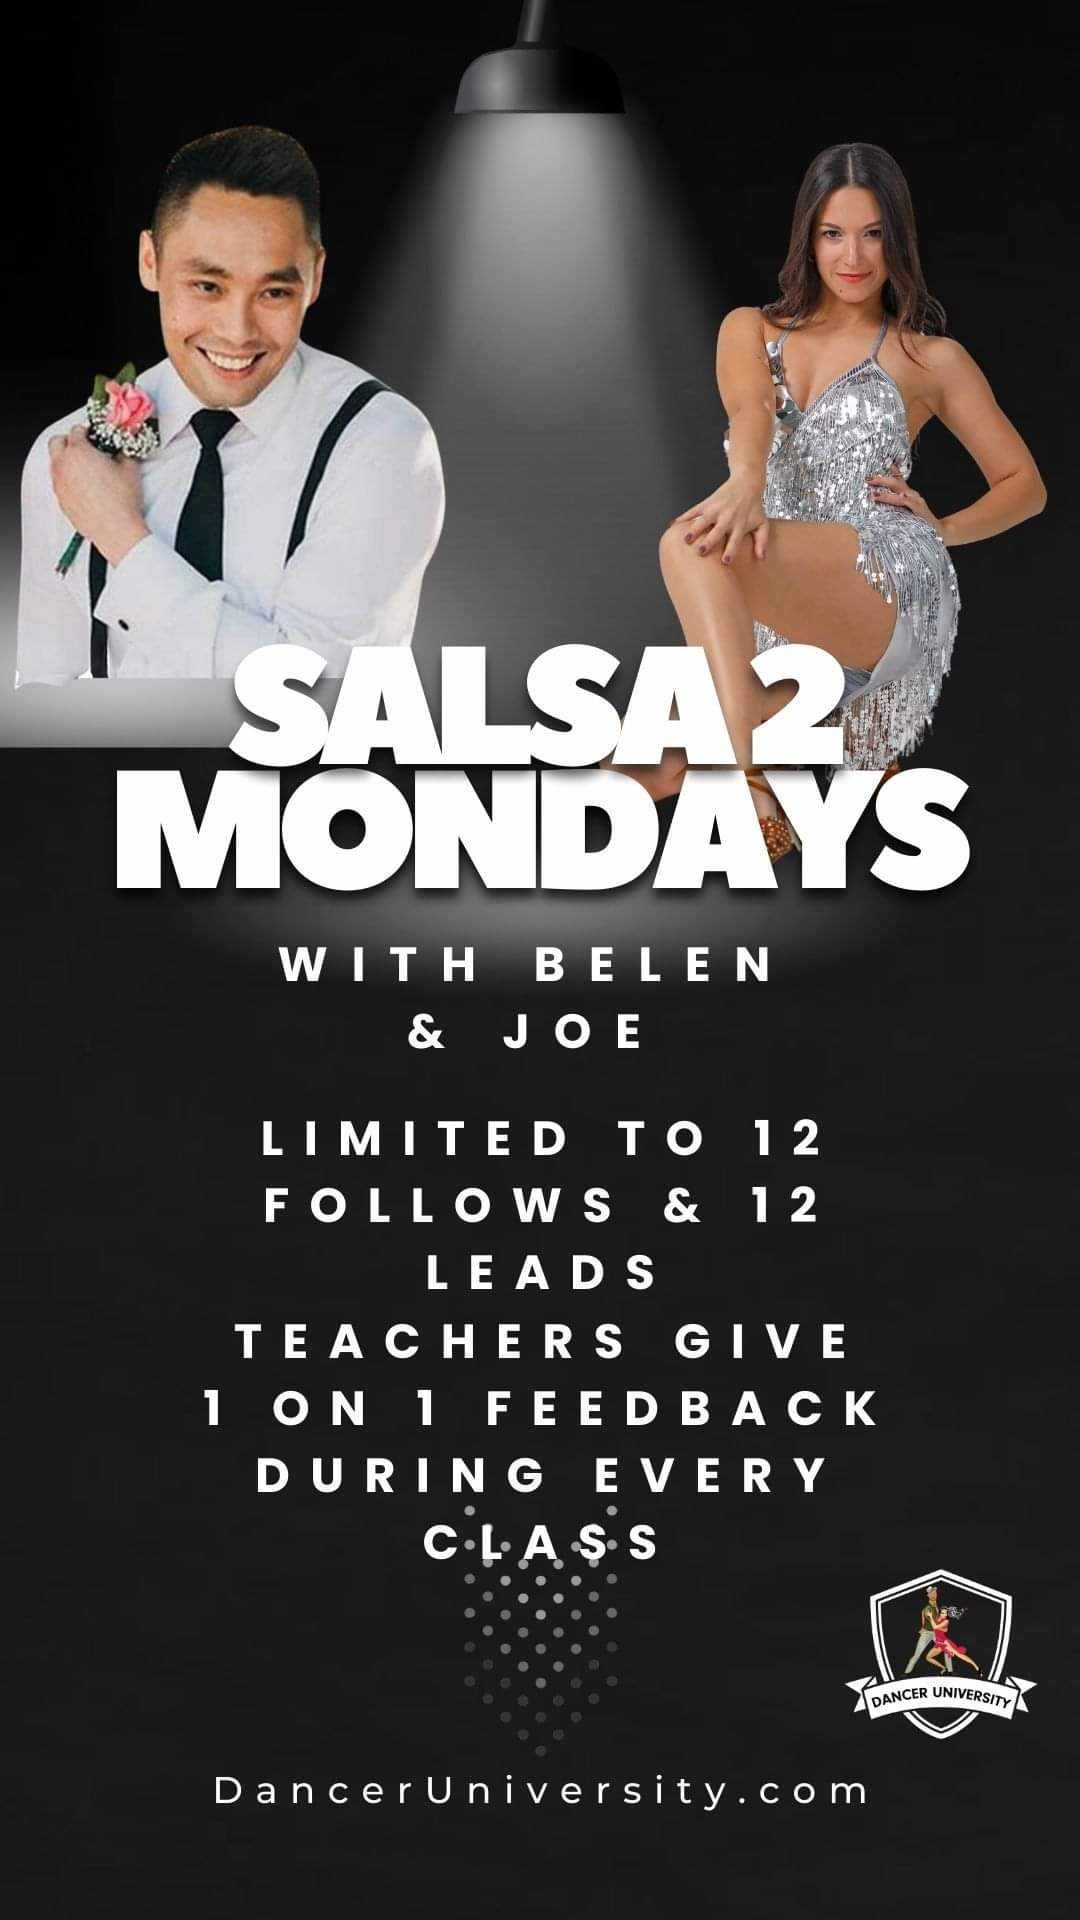 SALSA 2 MONDAYS WITH BELEN & JOE